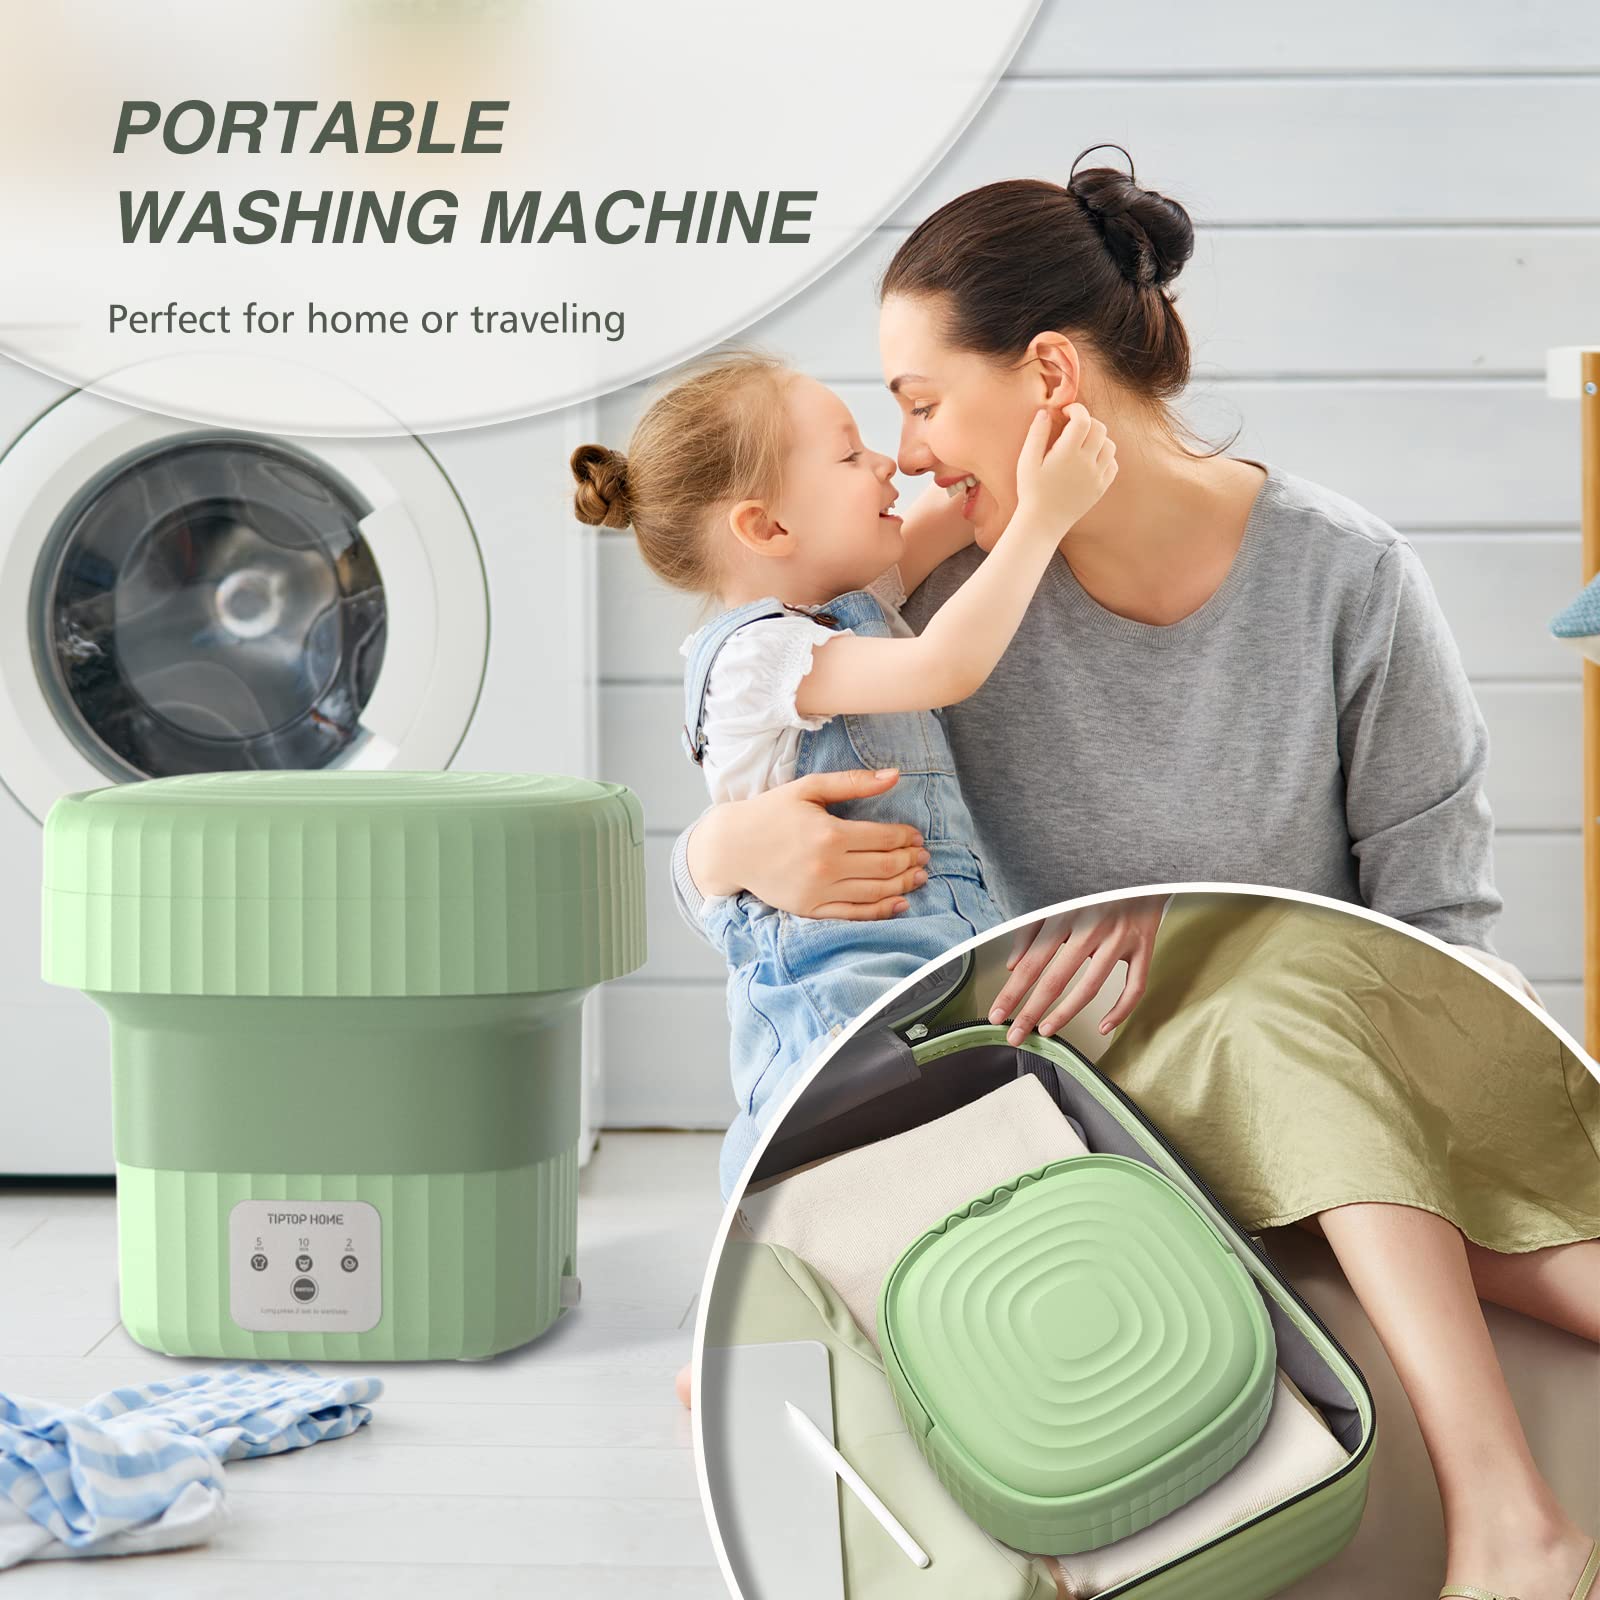 Bubbacare Portable Washing Machine, Mini Machine Ultrasonic Turbine Wash, Washer for Underwear, Sock, Baby Clothes, Travel, Camping, Dorm, RV, Home Foldable Small Laundry Green, JYJQ-26026 (MG)